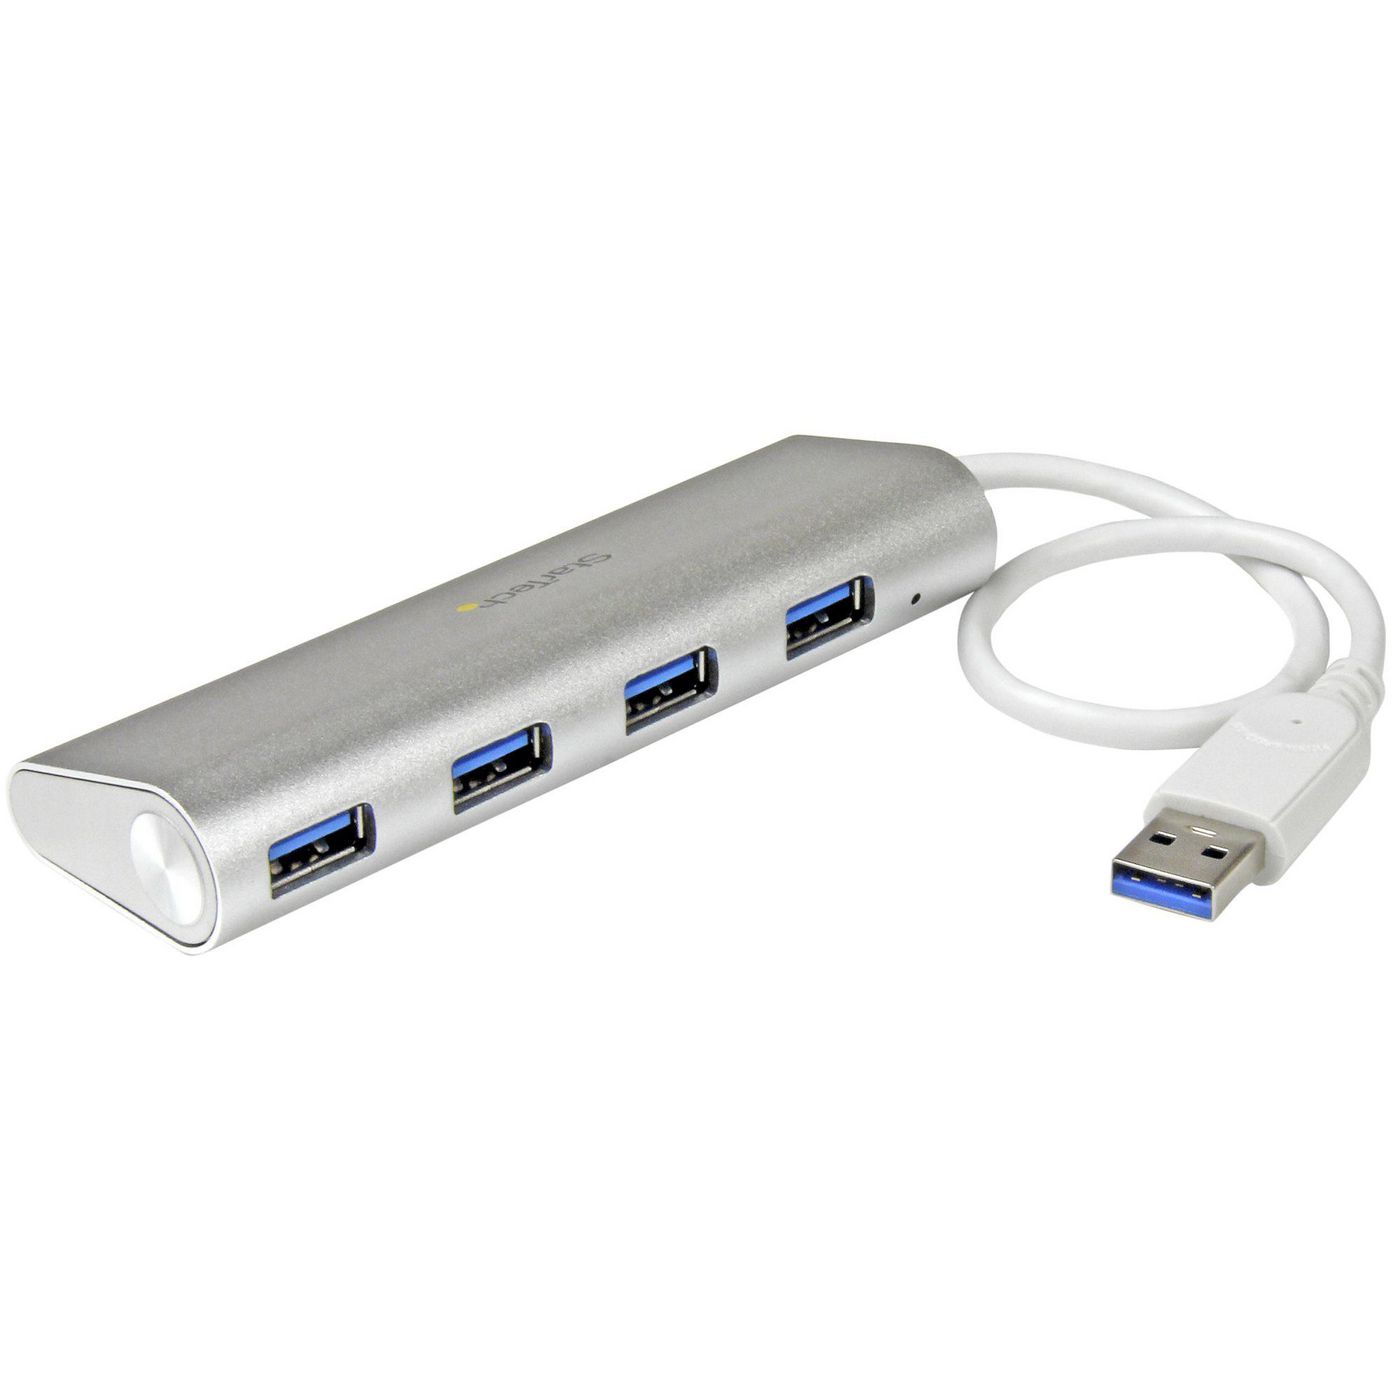 STARTECH.COM 4 Port kompakter USB 3.0 Hub mit eingebautem Kabel - Aluminium USB Hub - Silber